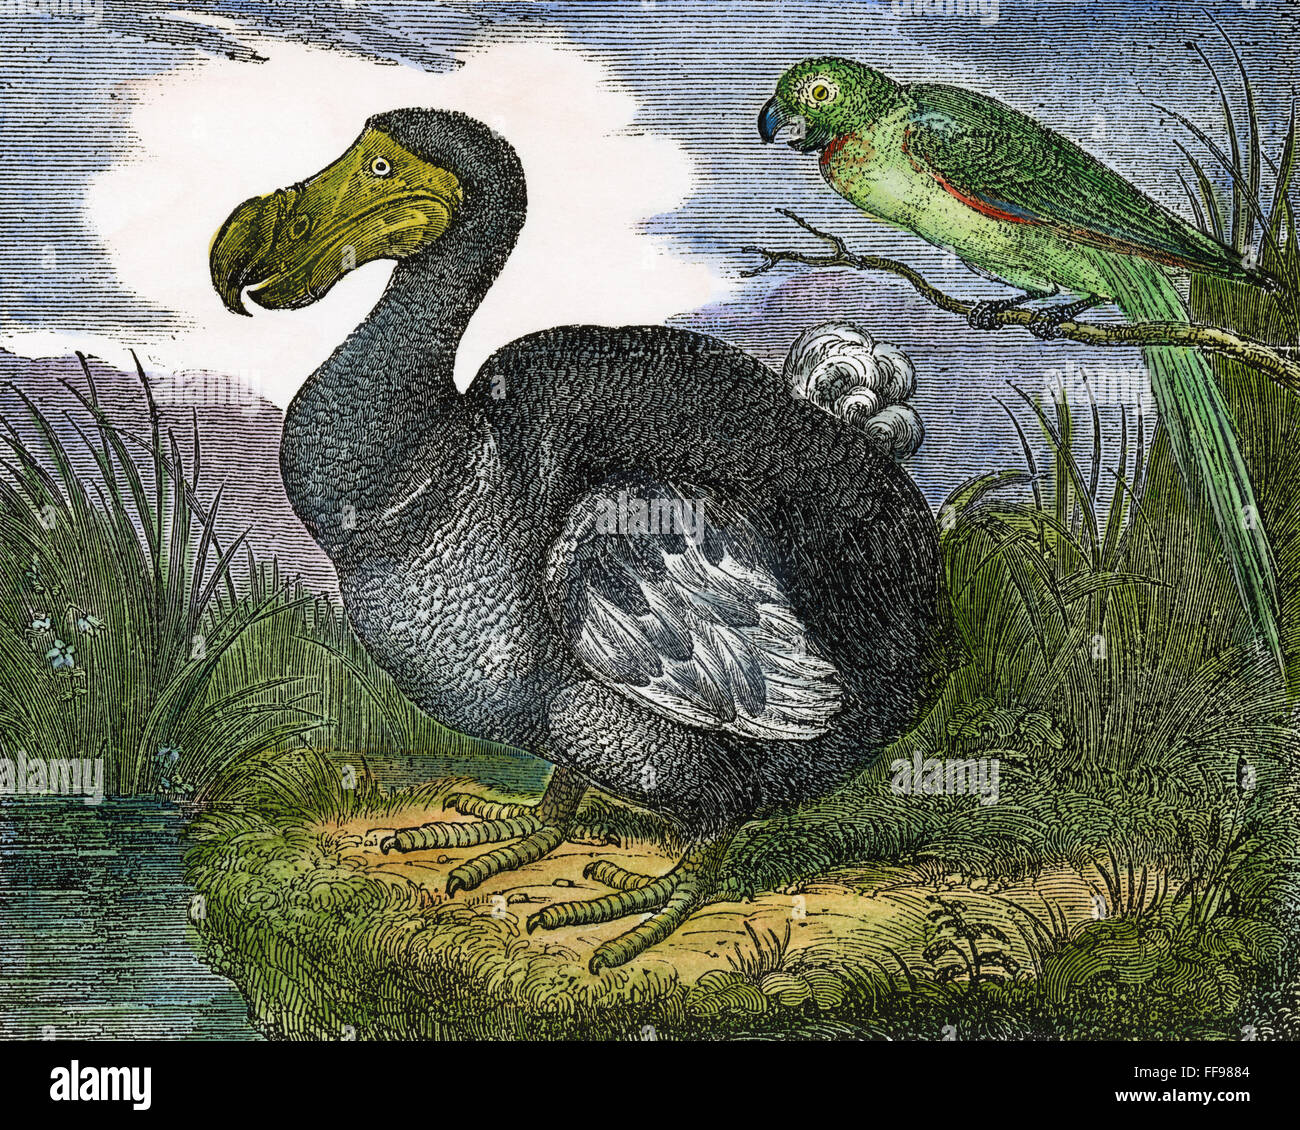 MAURITIUS DODO. /nThe Mauritius dodo (Raphus cucullatus), a now extinct flightless bird. Wood engraving, English, 1833. Stock Photo